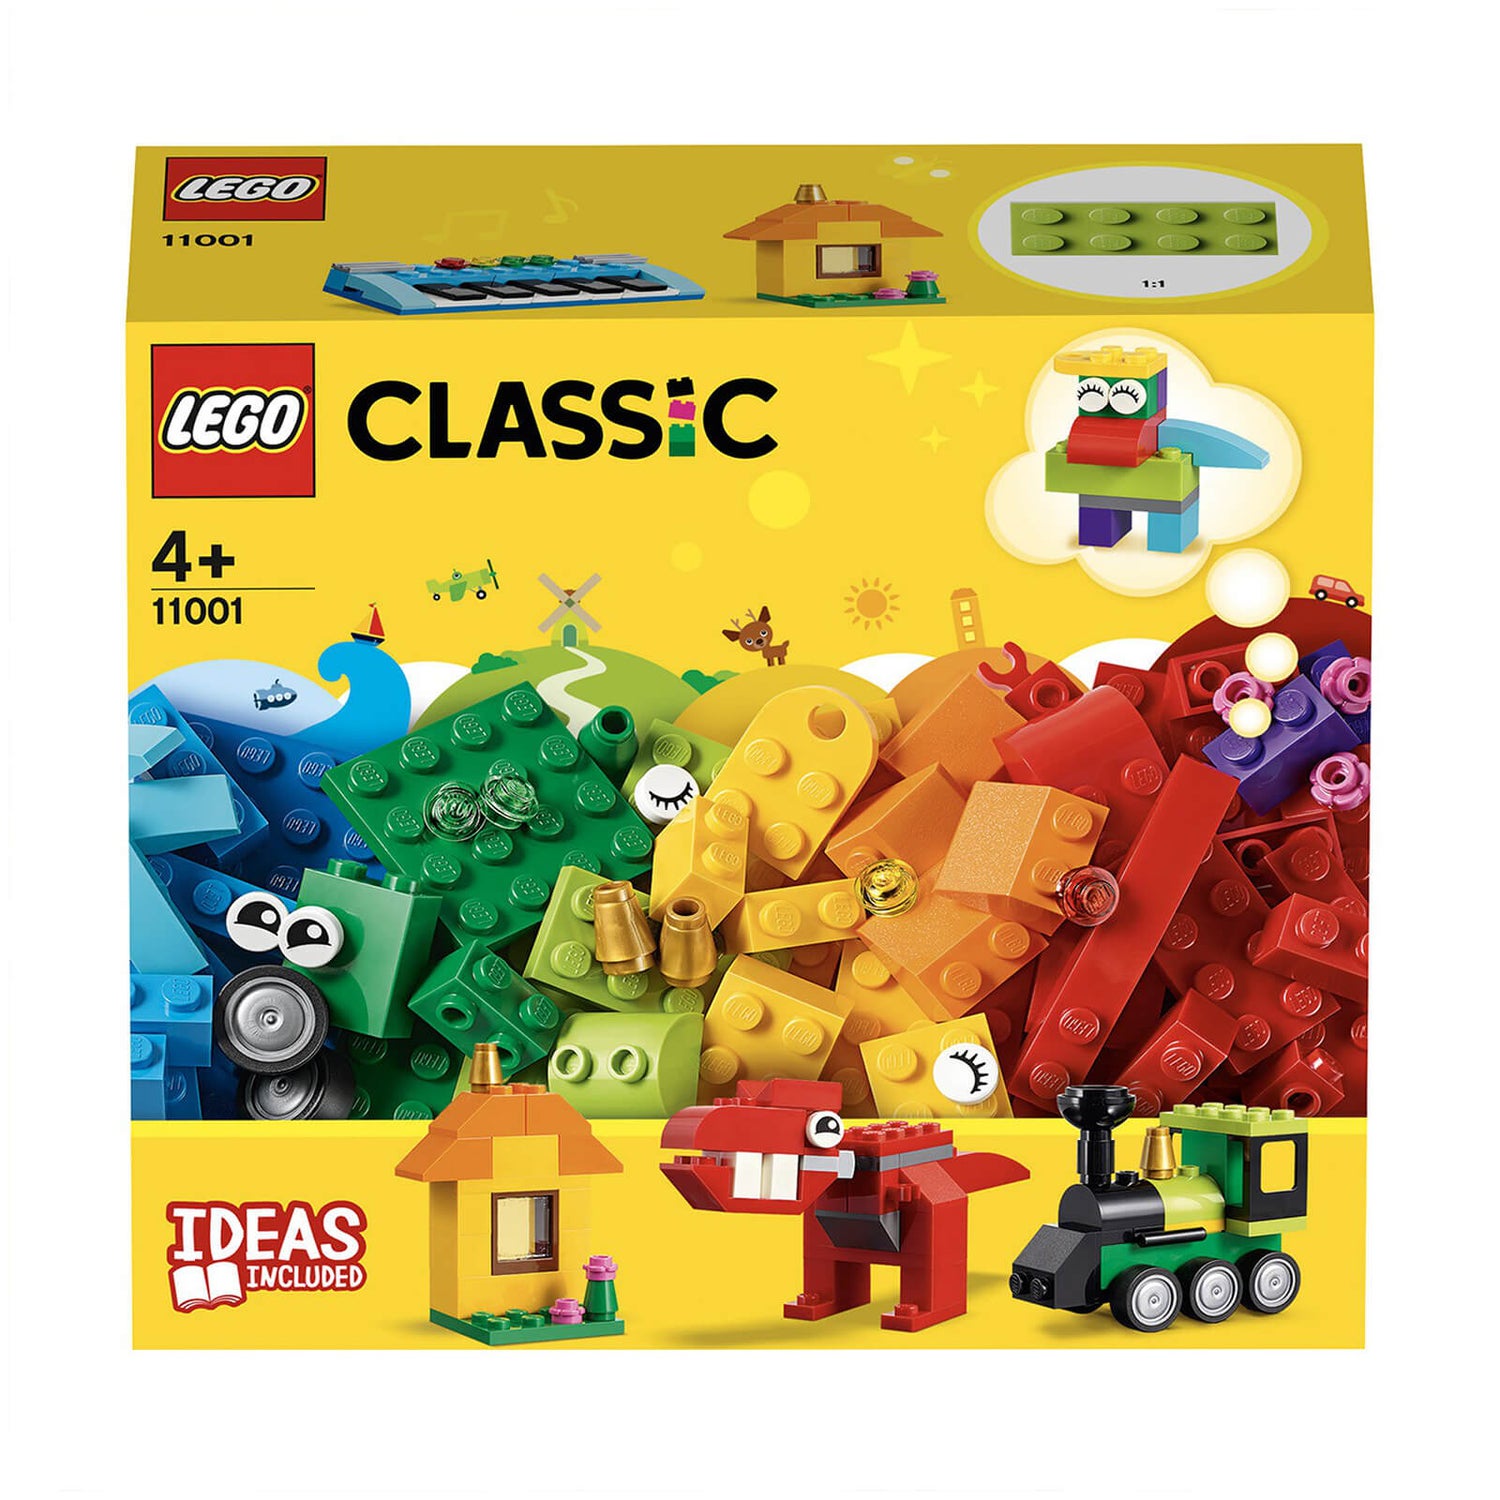 LEGO Classic: Bausteine - Erster Bauspaß (11001)